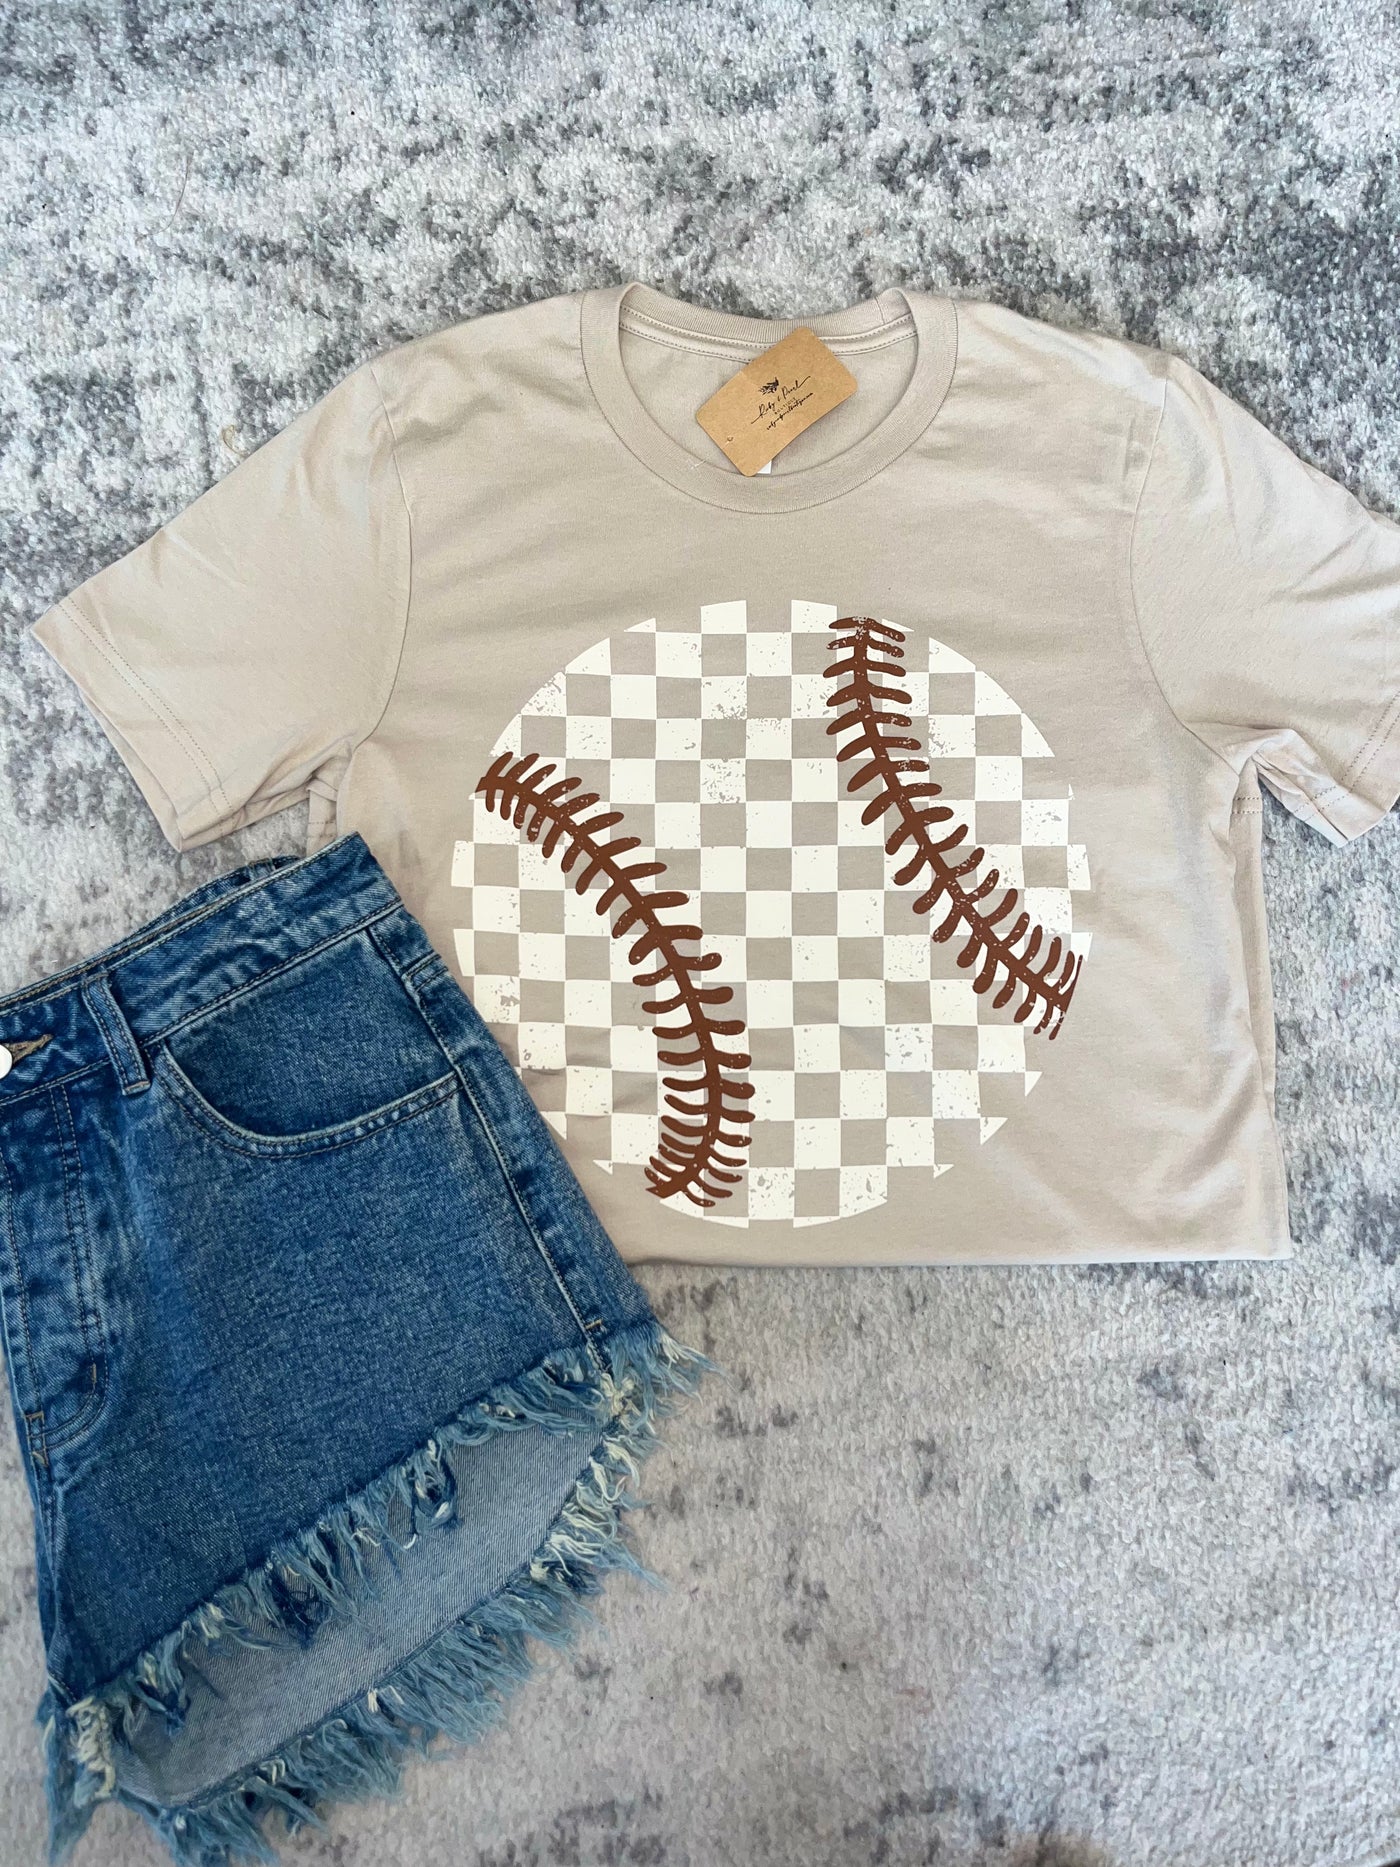 The Checkered Baseball Tee